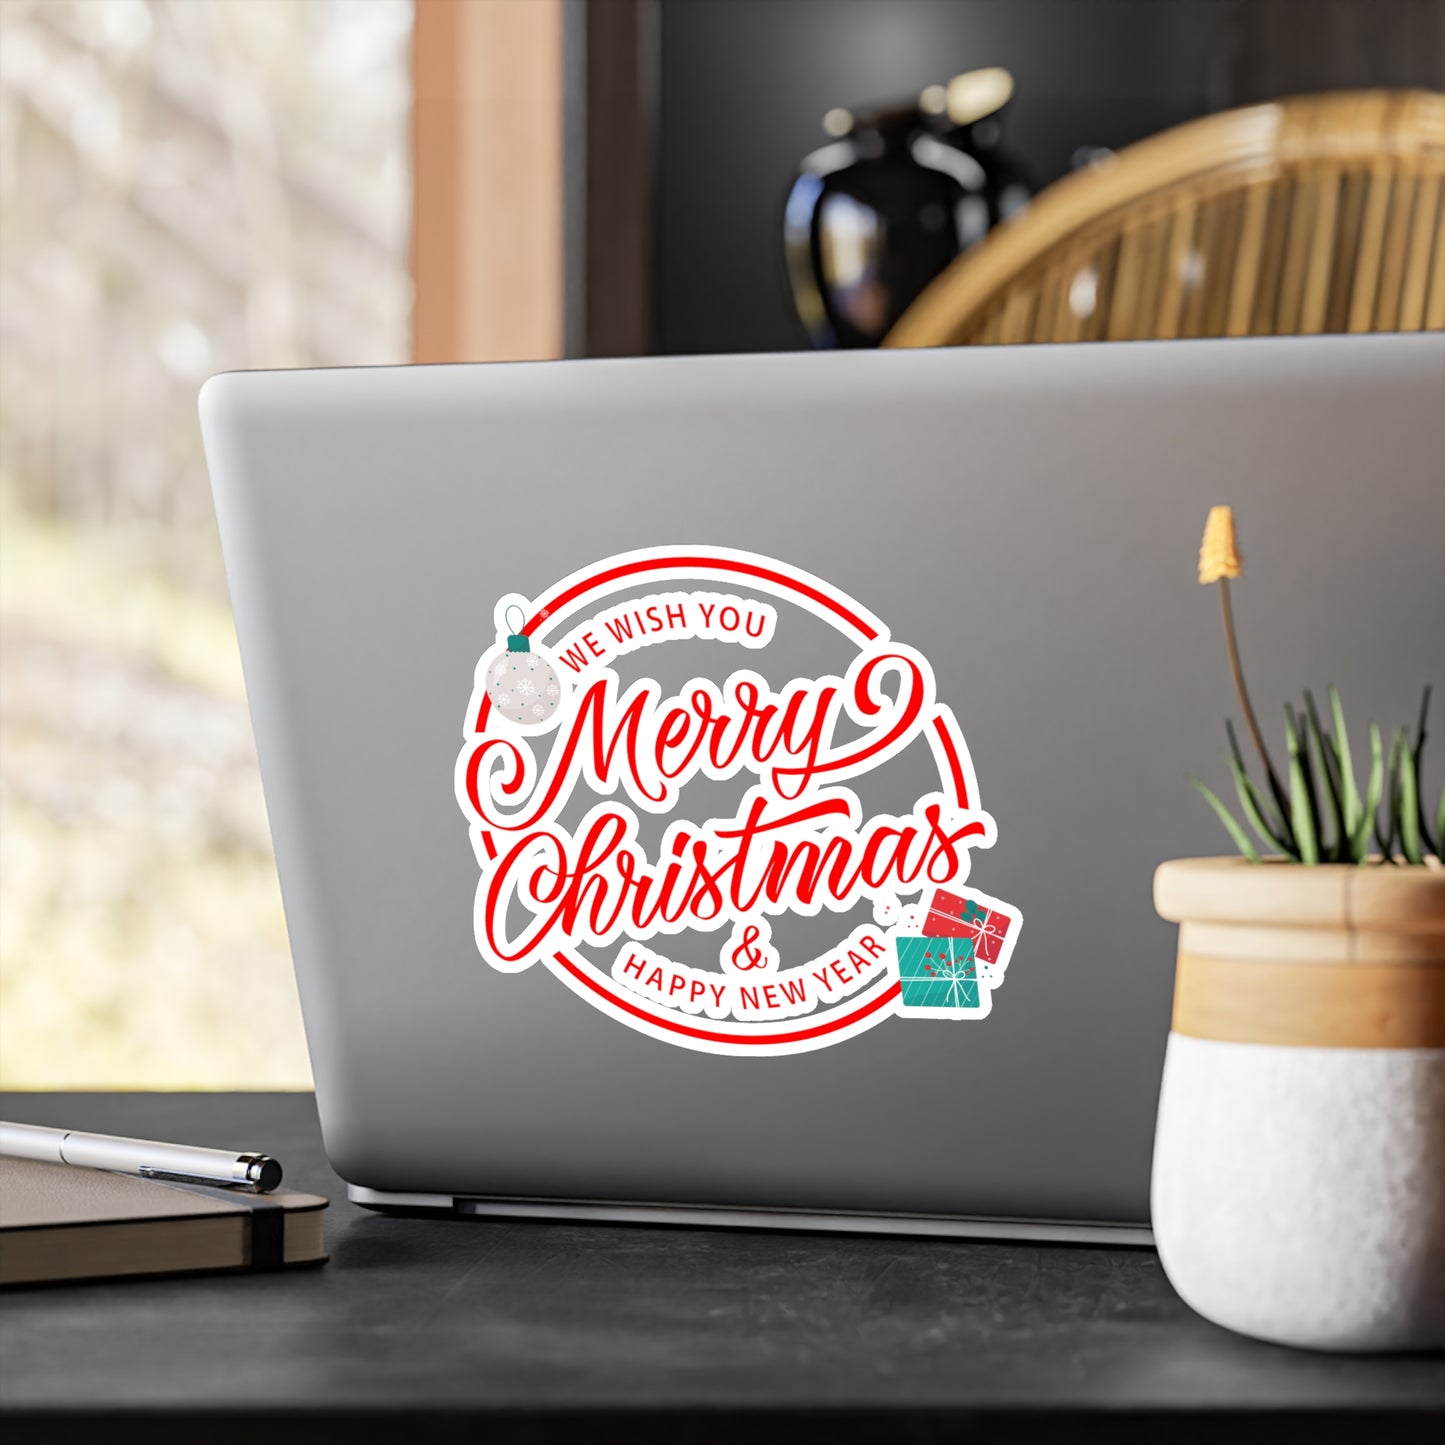 We Wish You Merry Christmas & Happy New Year Sticker